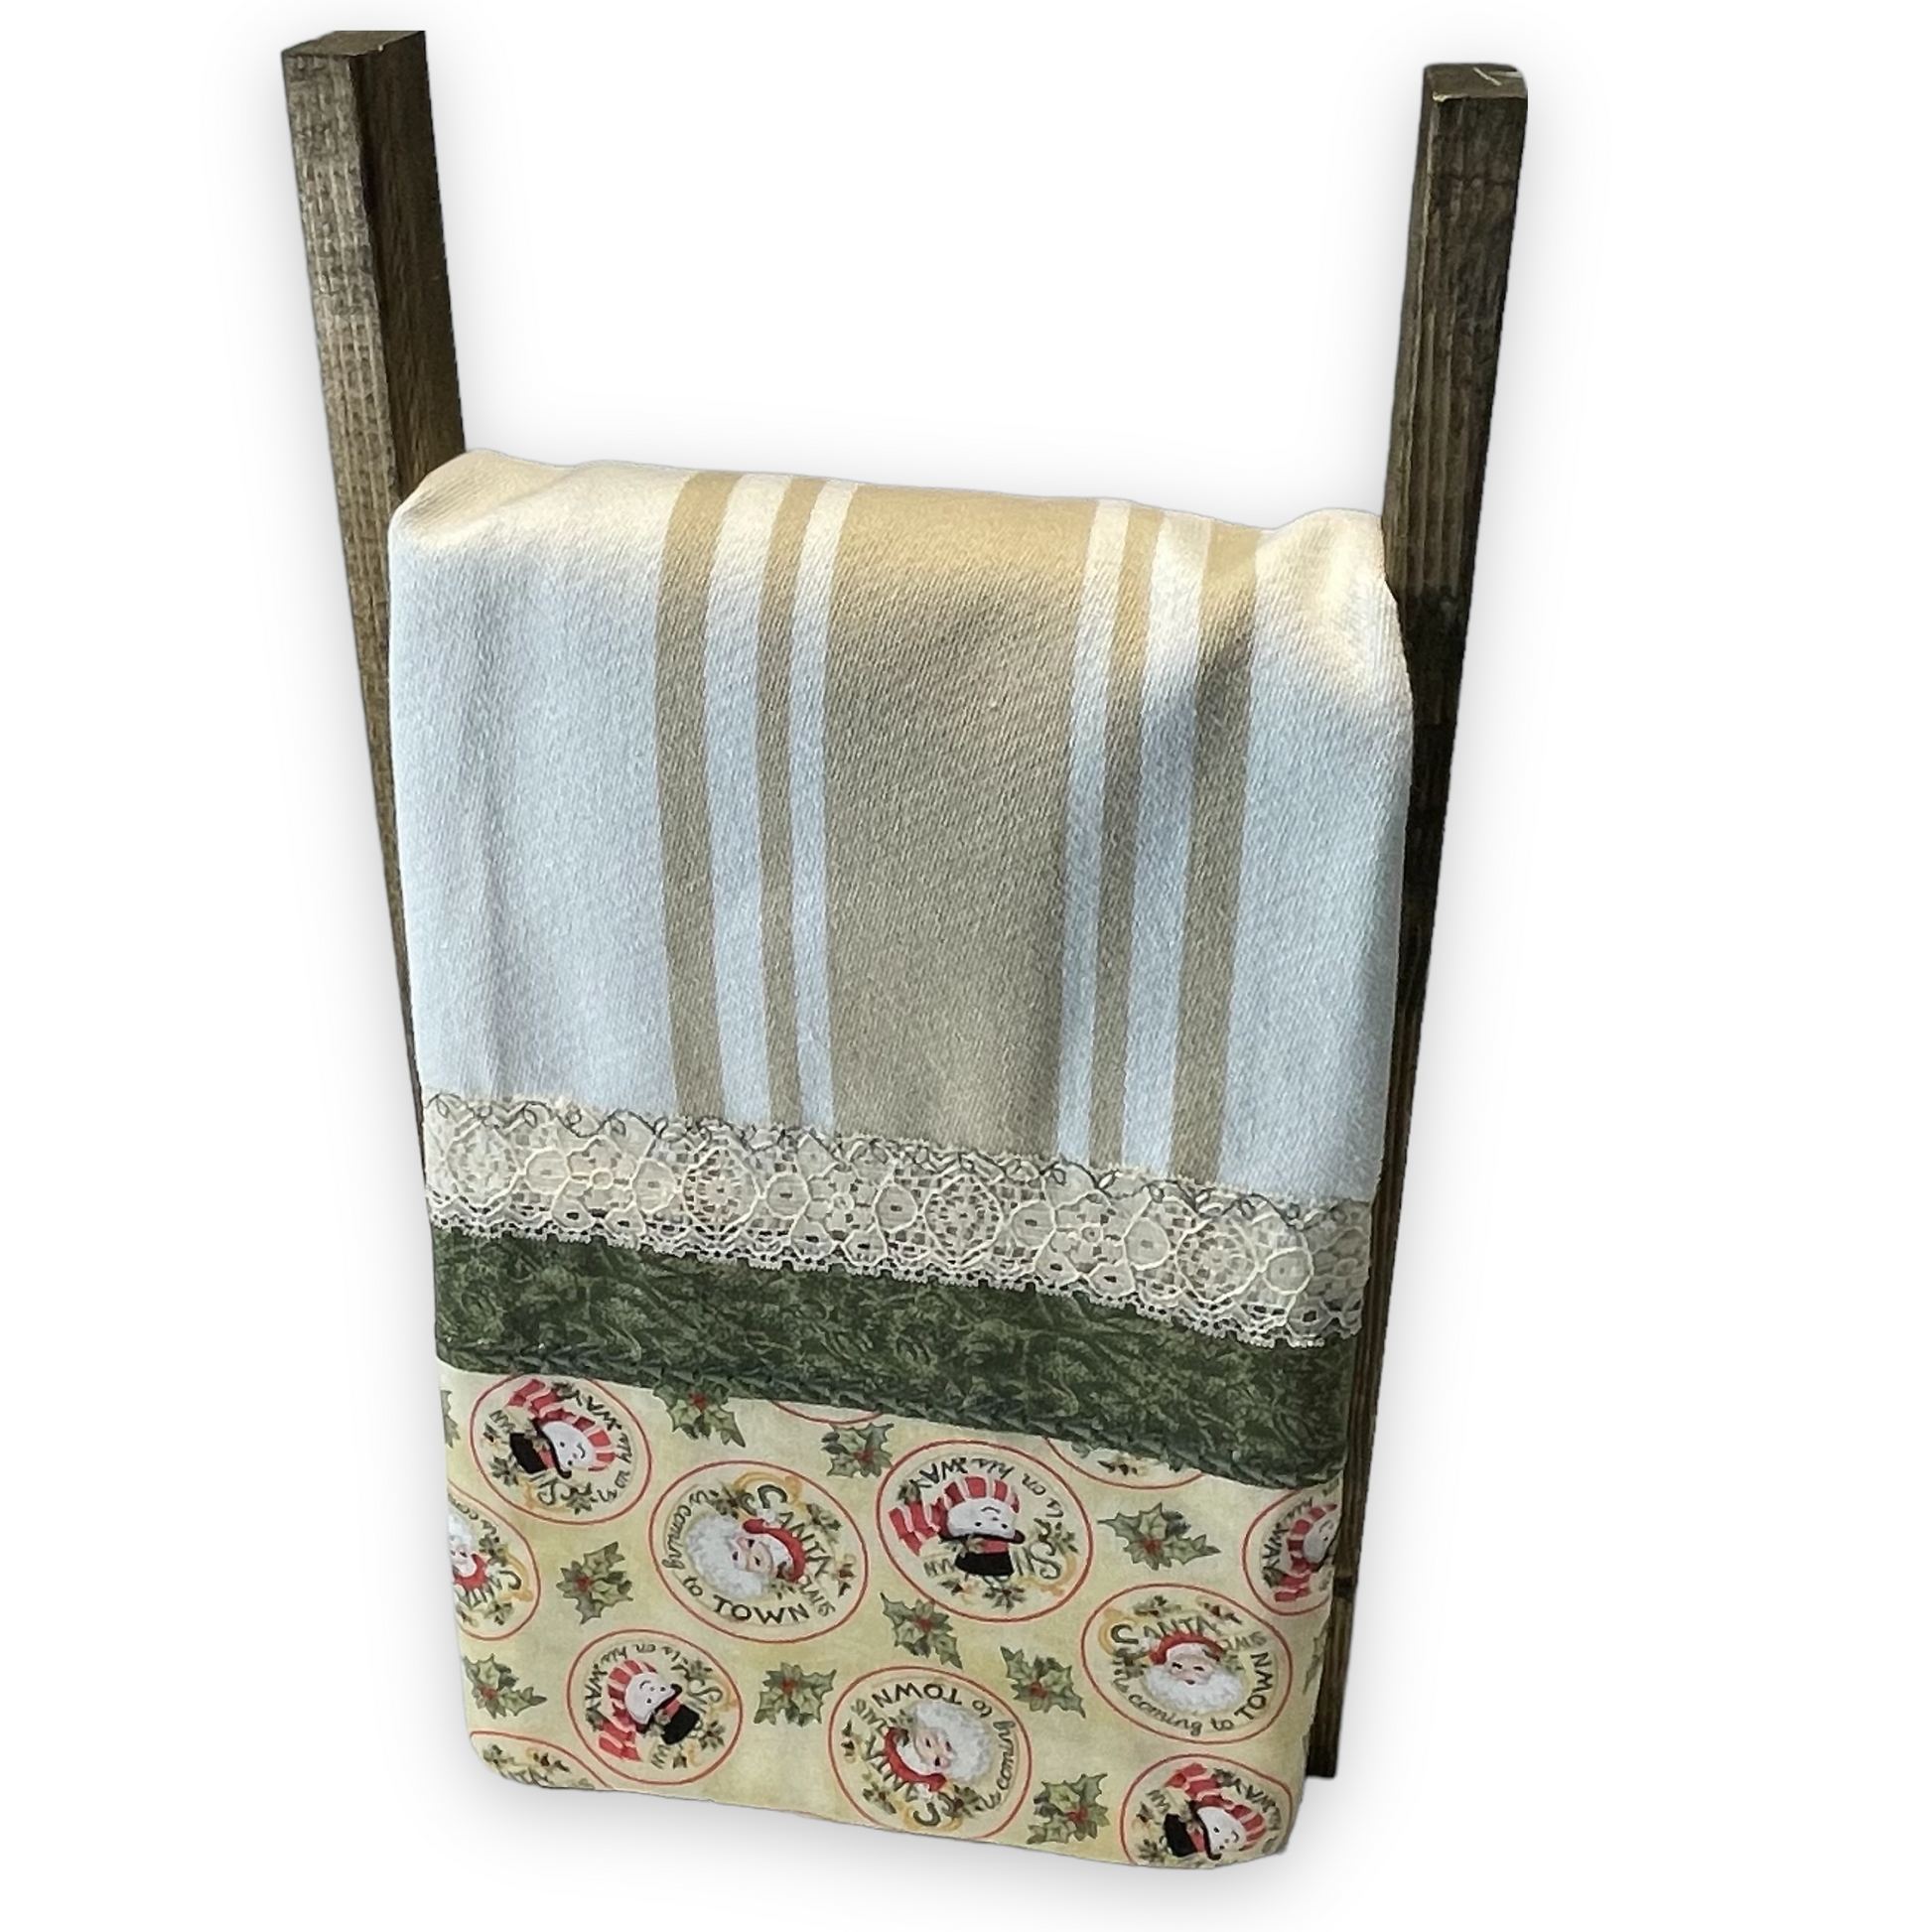 Retro Santa and Snowman Tea Towel. Decorative Handcrafted Christmas Dish Towel - Home Stitchery Decor